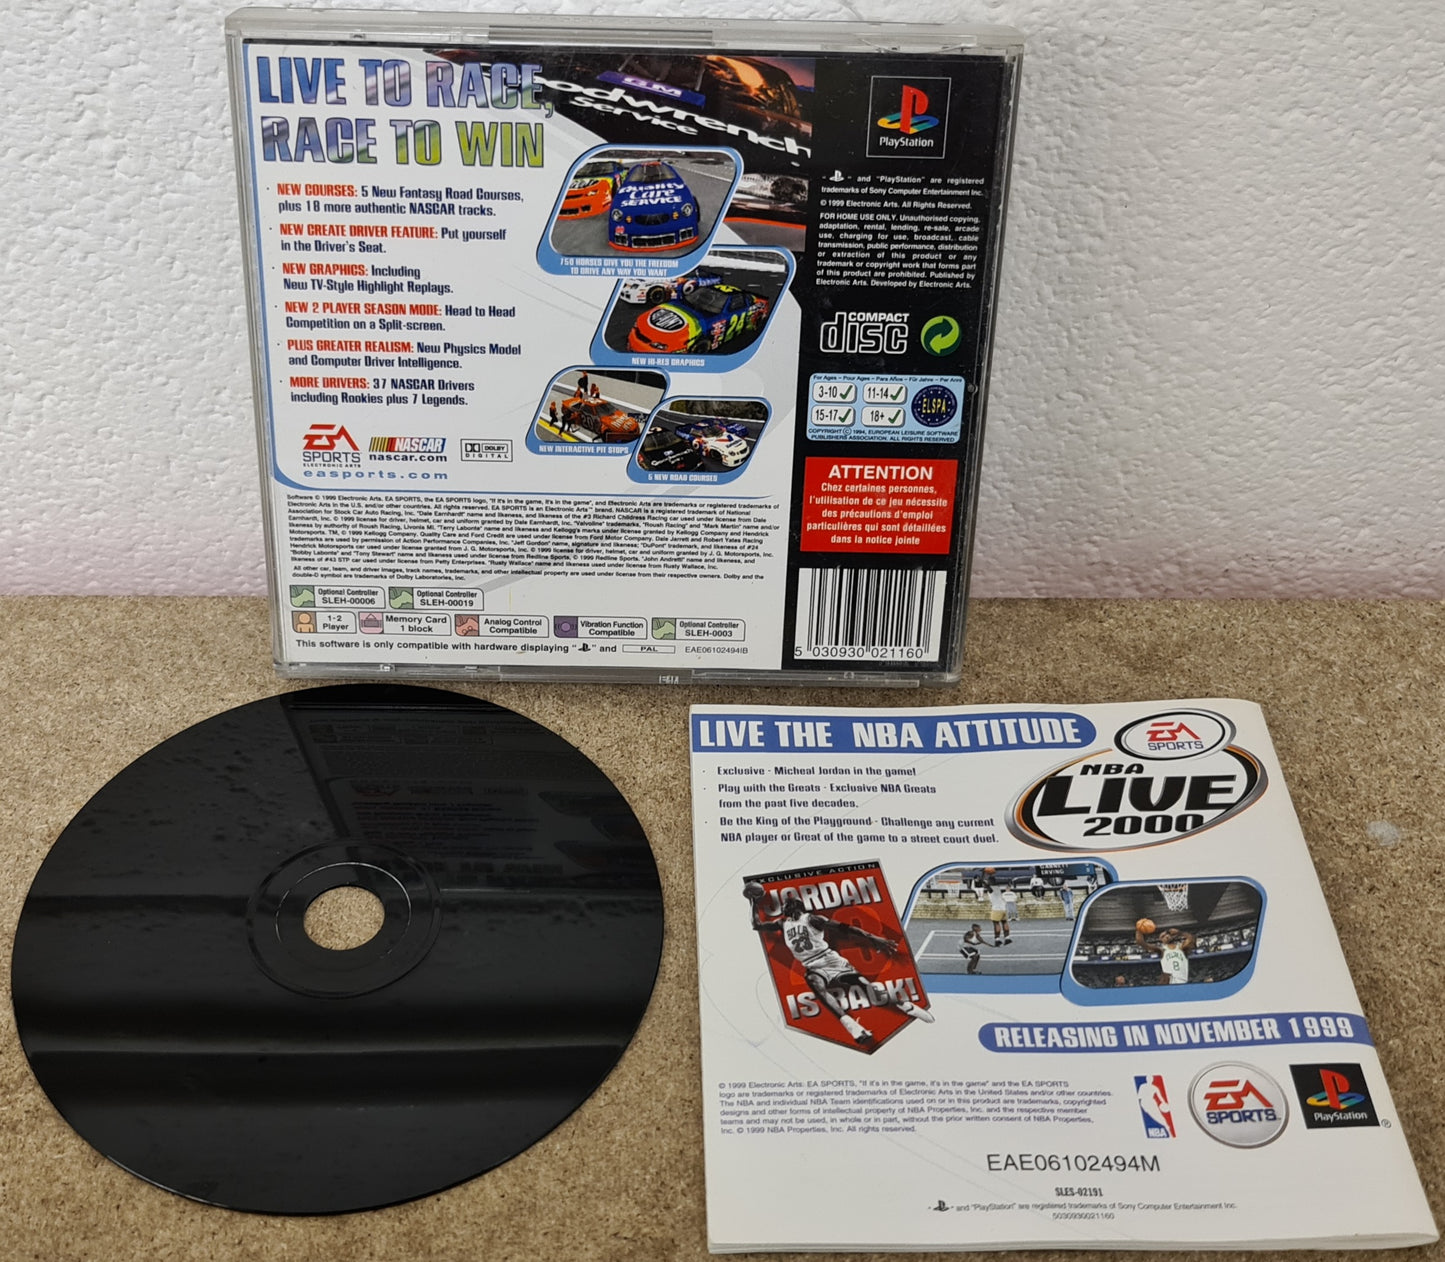 NASCAR 2000 Black Label Sony Playstation 1 (PS1) Game